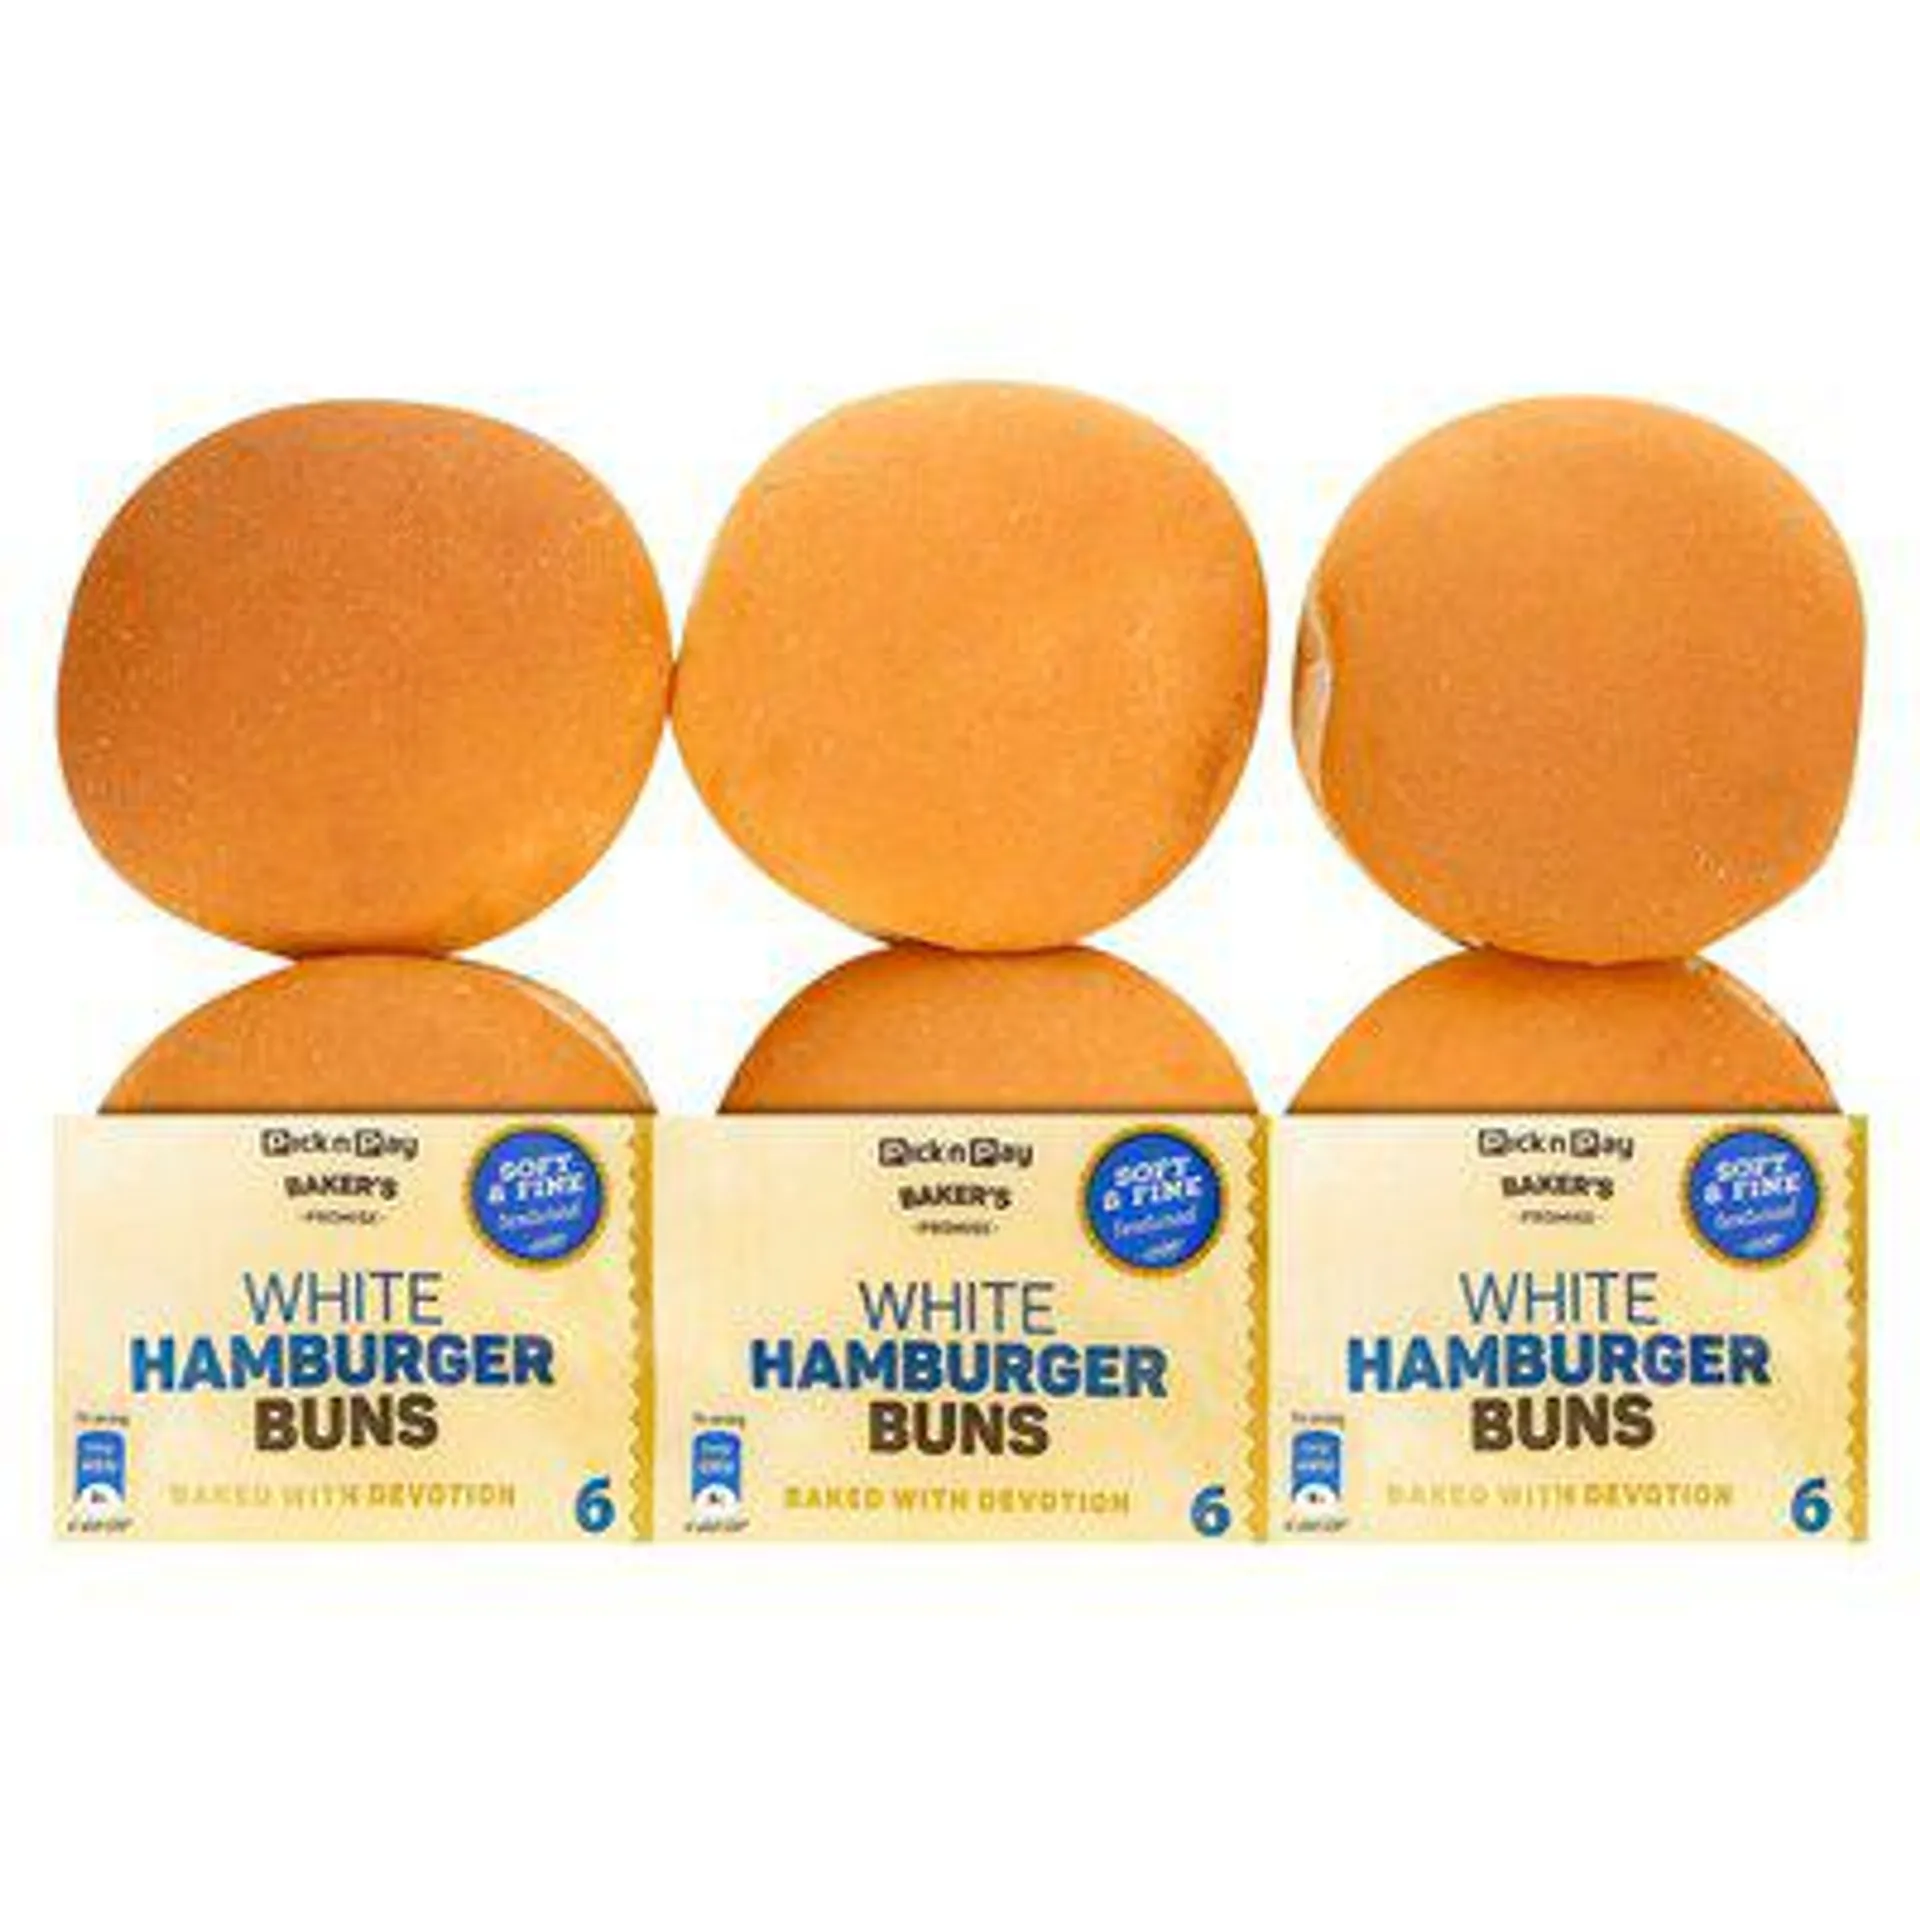 PnP White Hamburger Buns 6 Pack